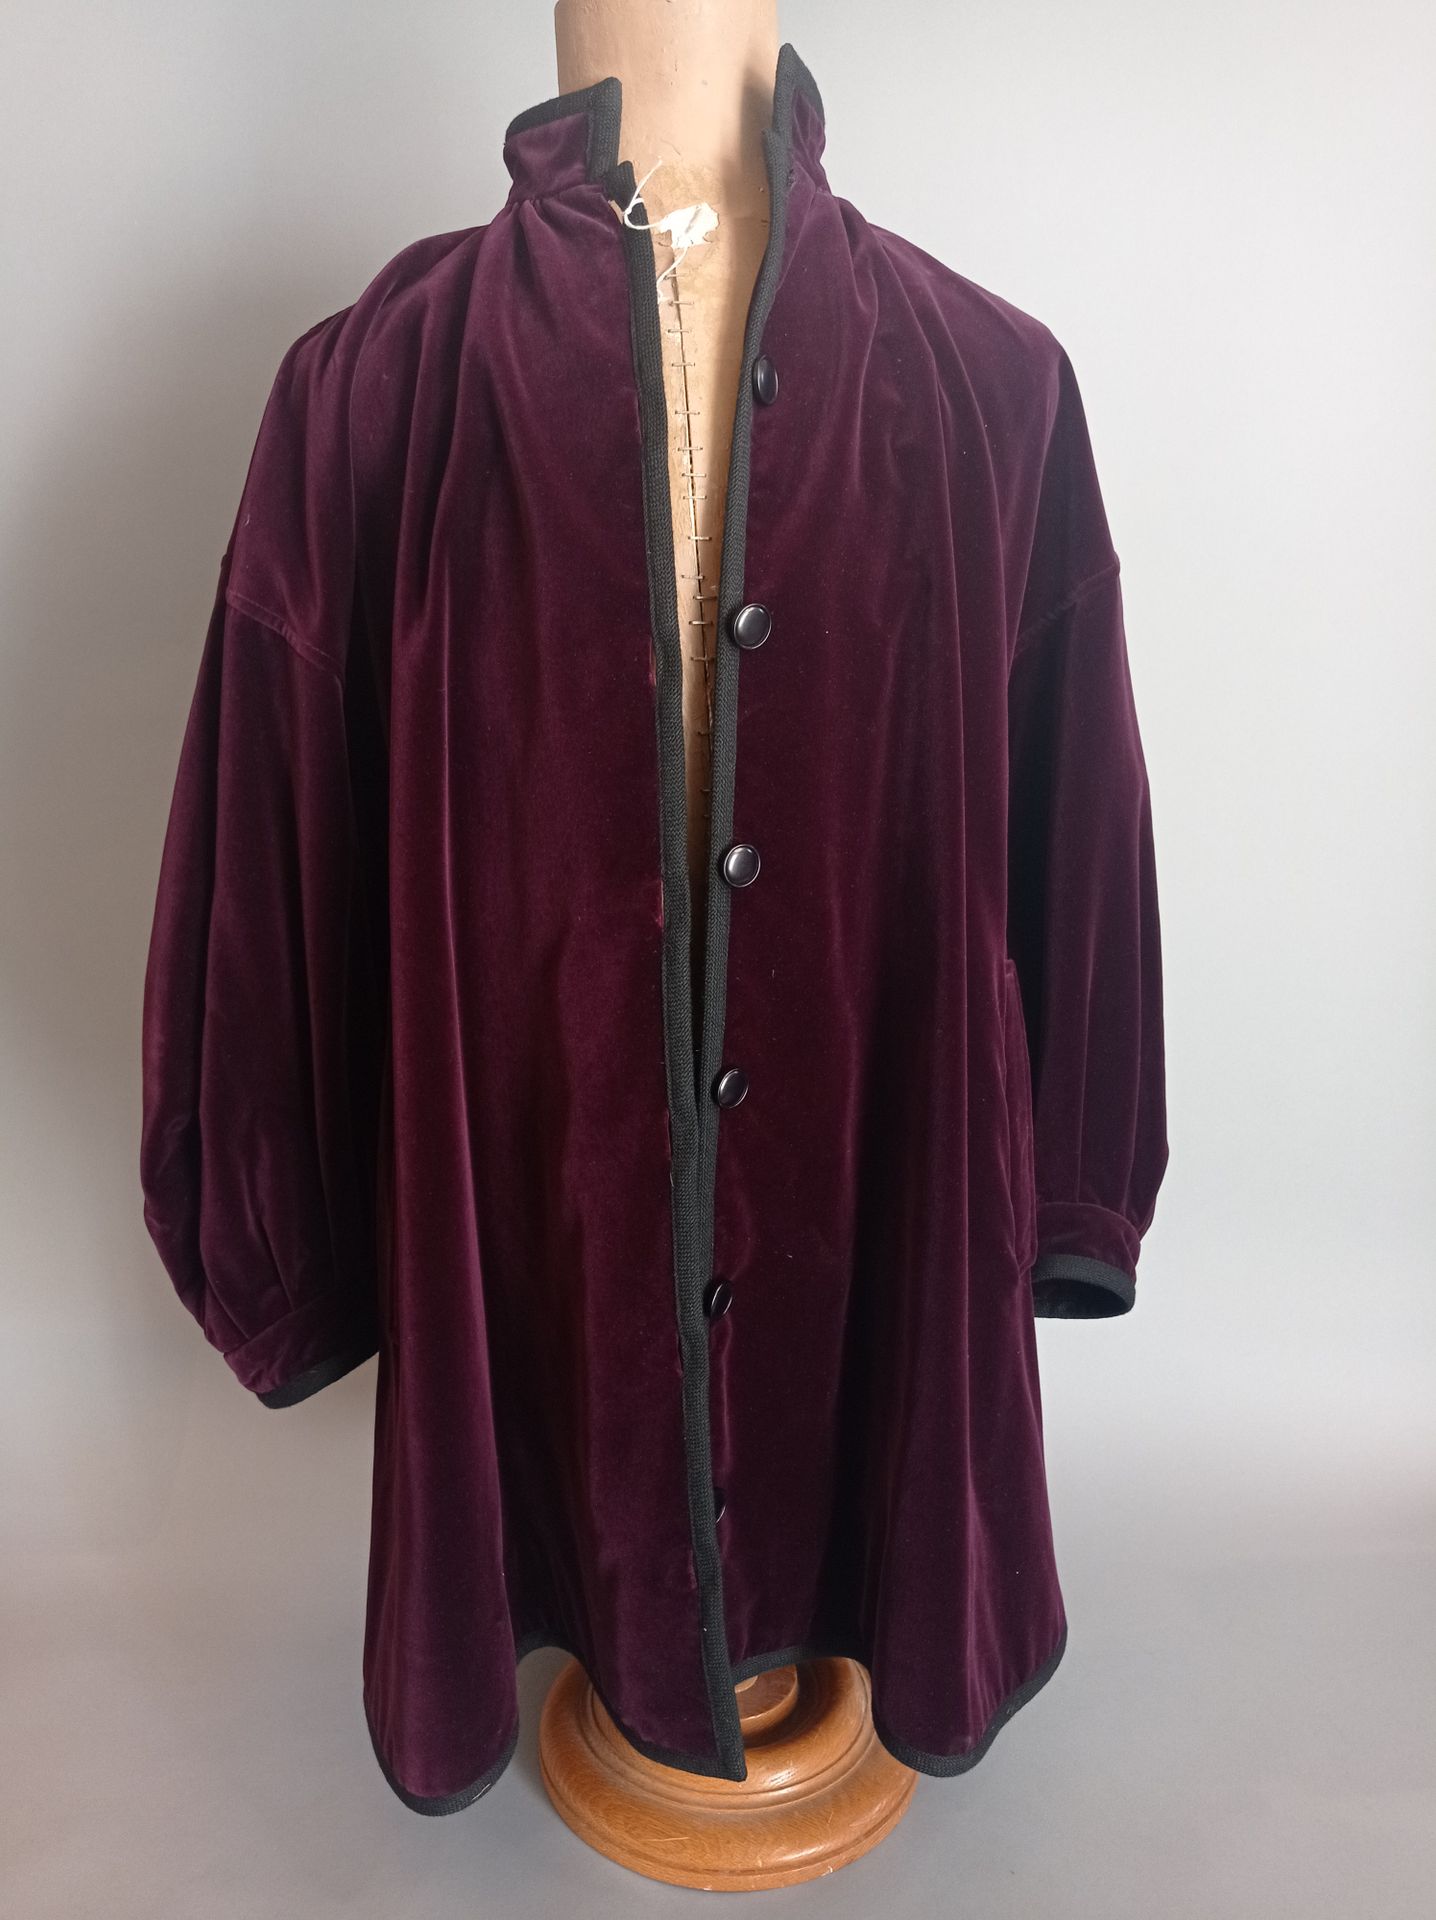 SAINT LAURENT Rive Gauche 紫色天鹅绒外套
尺寸38